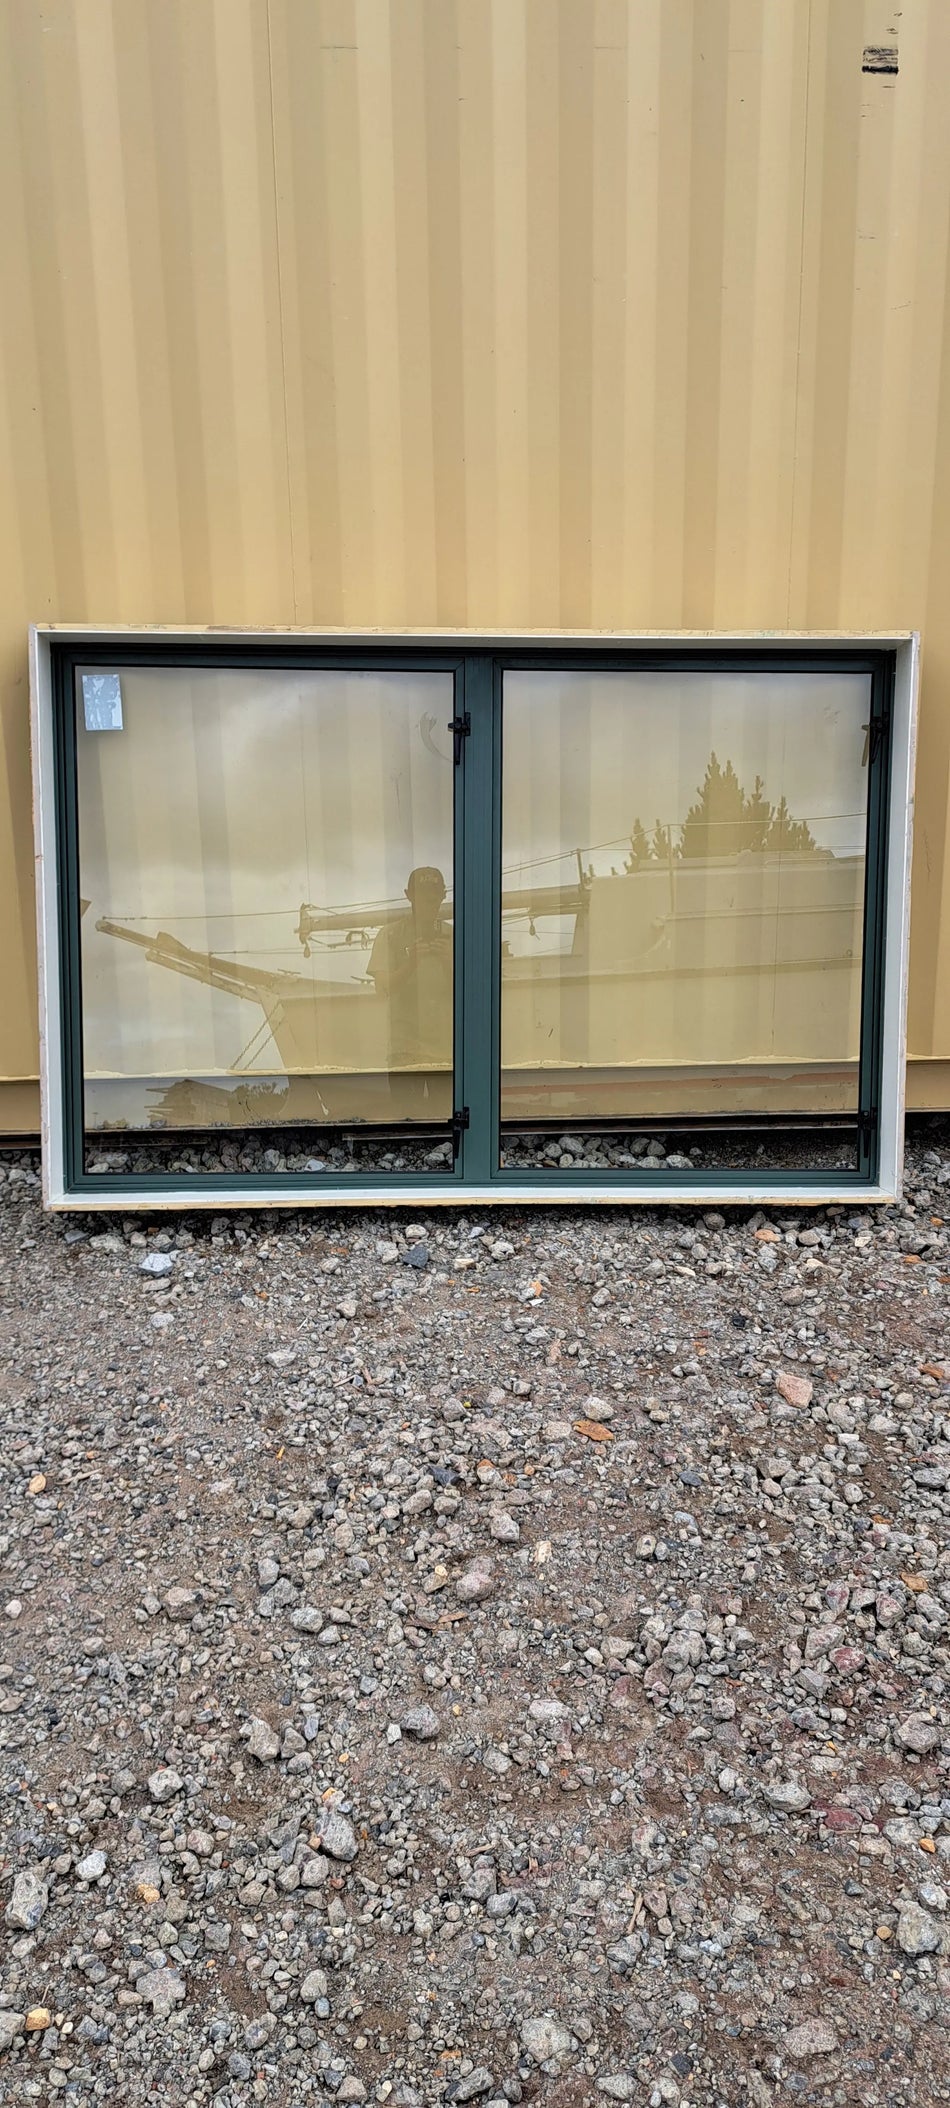 Green Aluminium Window 1900 W x 1260 H [#4070aSF] Joinery Recycle